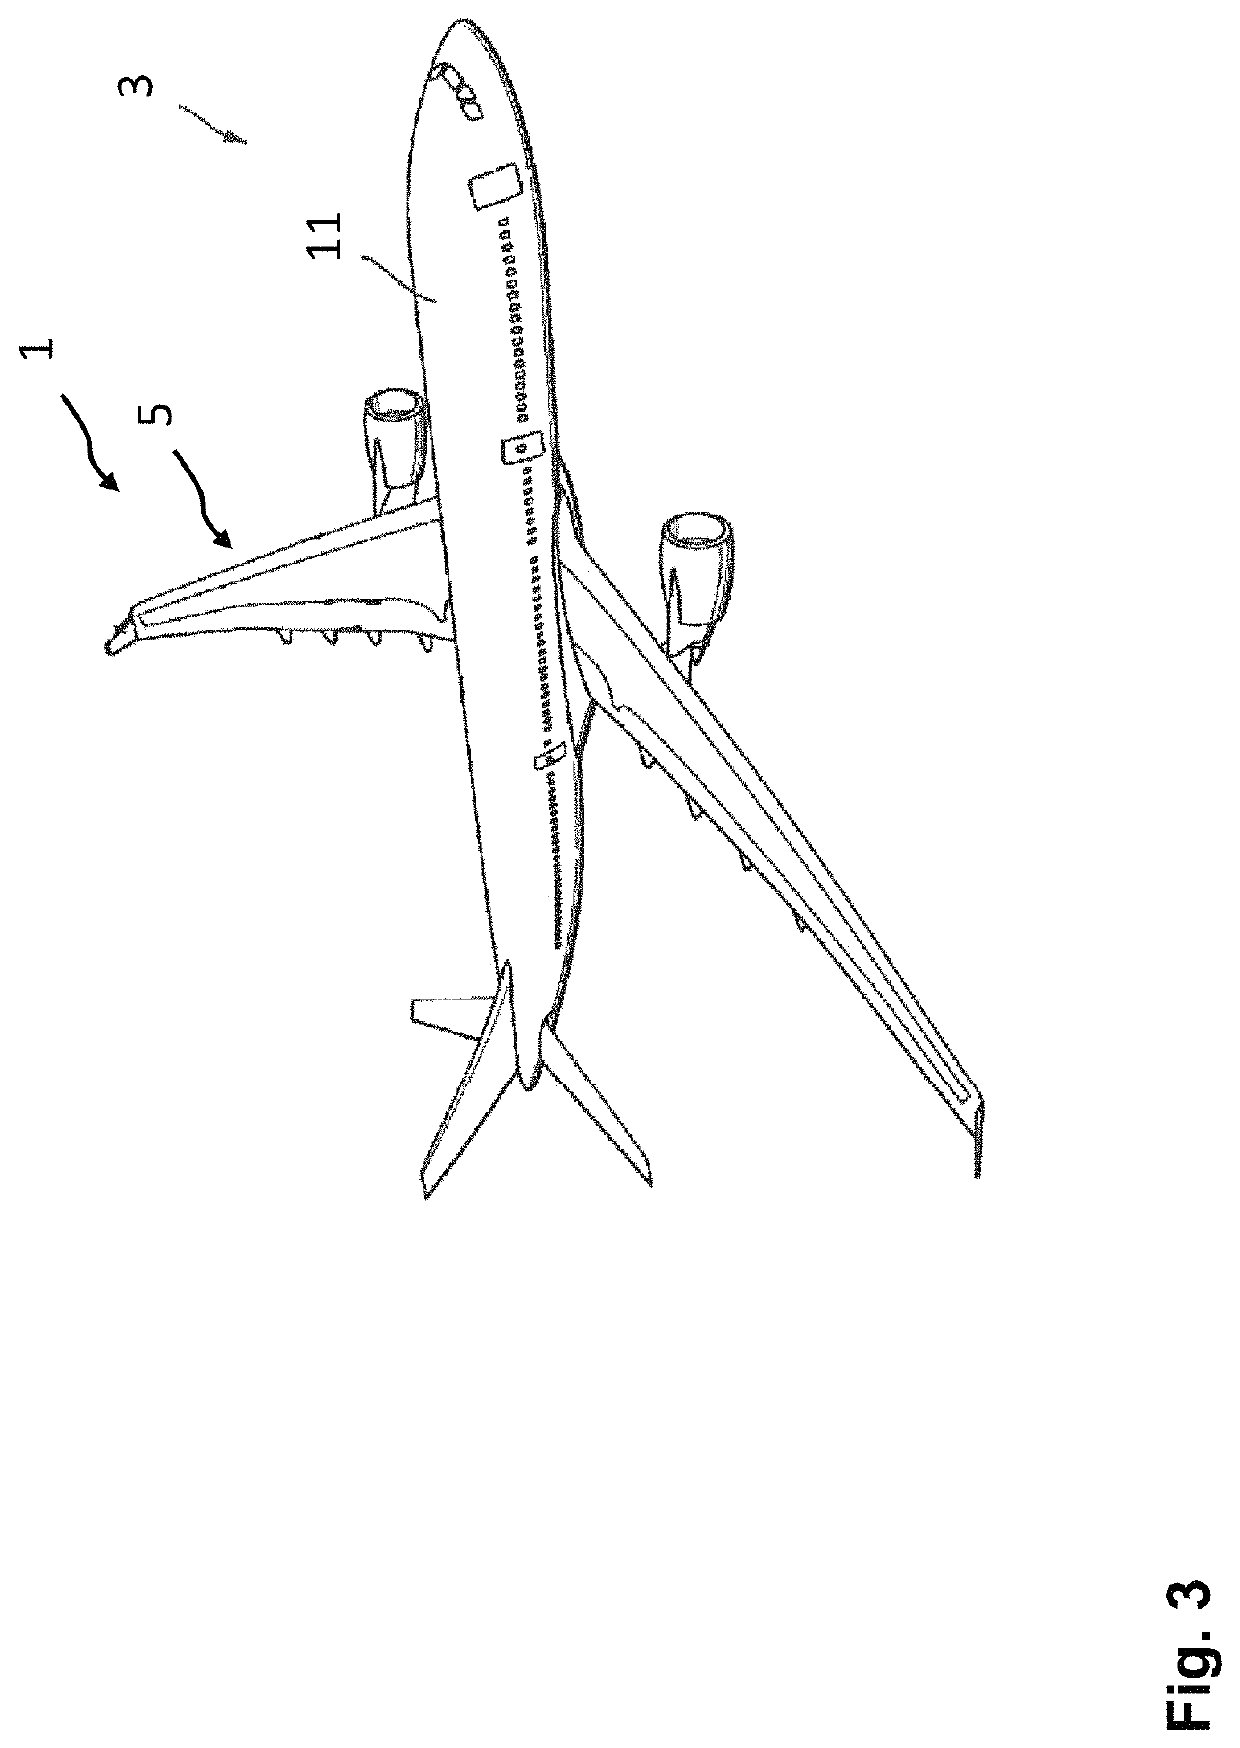 Wing arrangement for an aircraft and aircraft